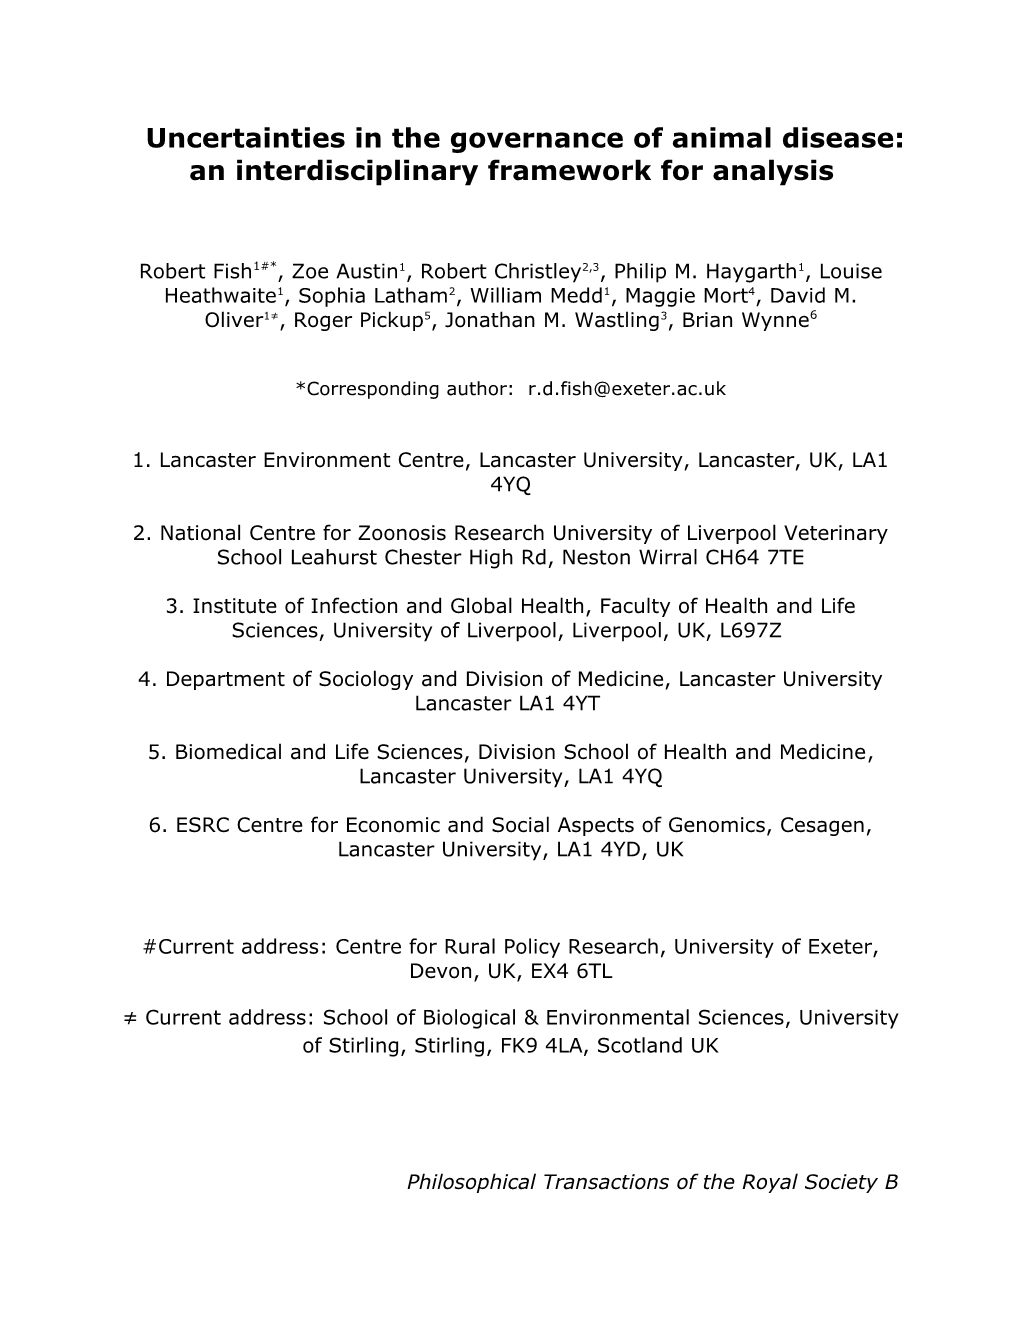 Uncertainties in the Governance of Animal Disease: an Interdisciplinary Framework for Analysis